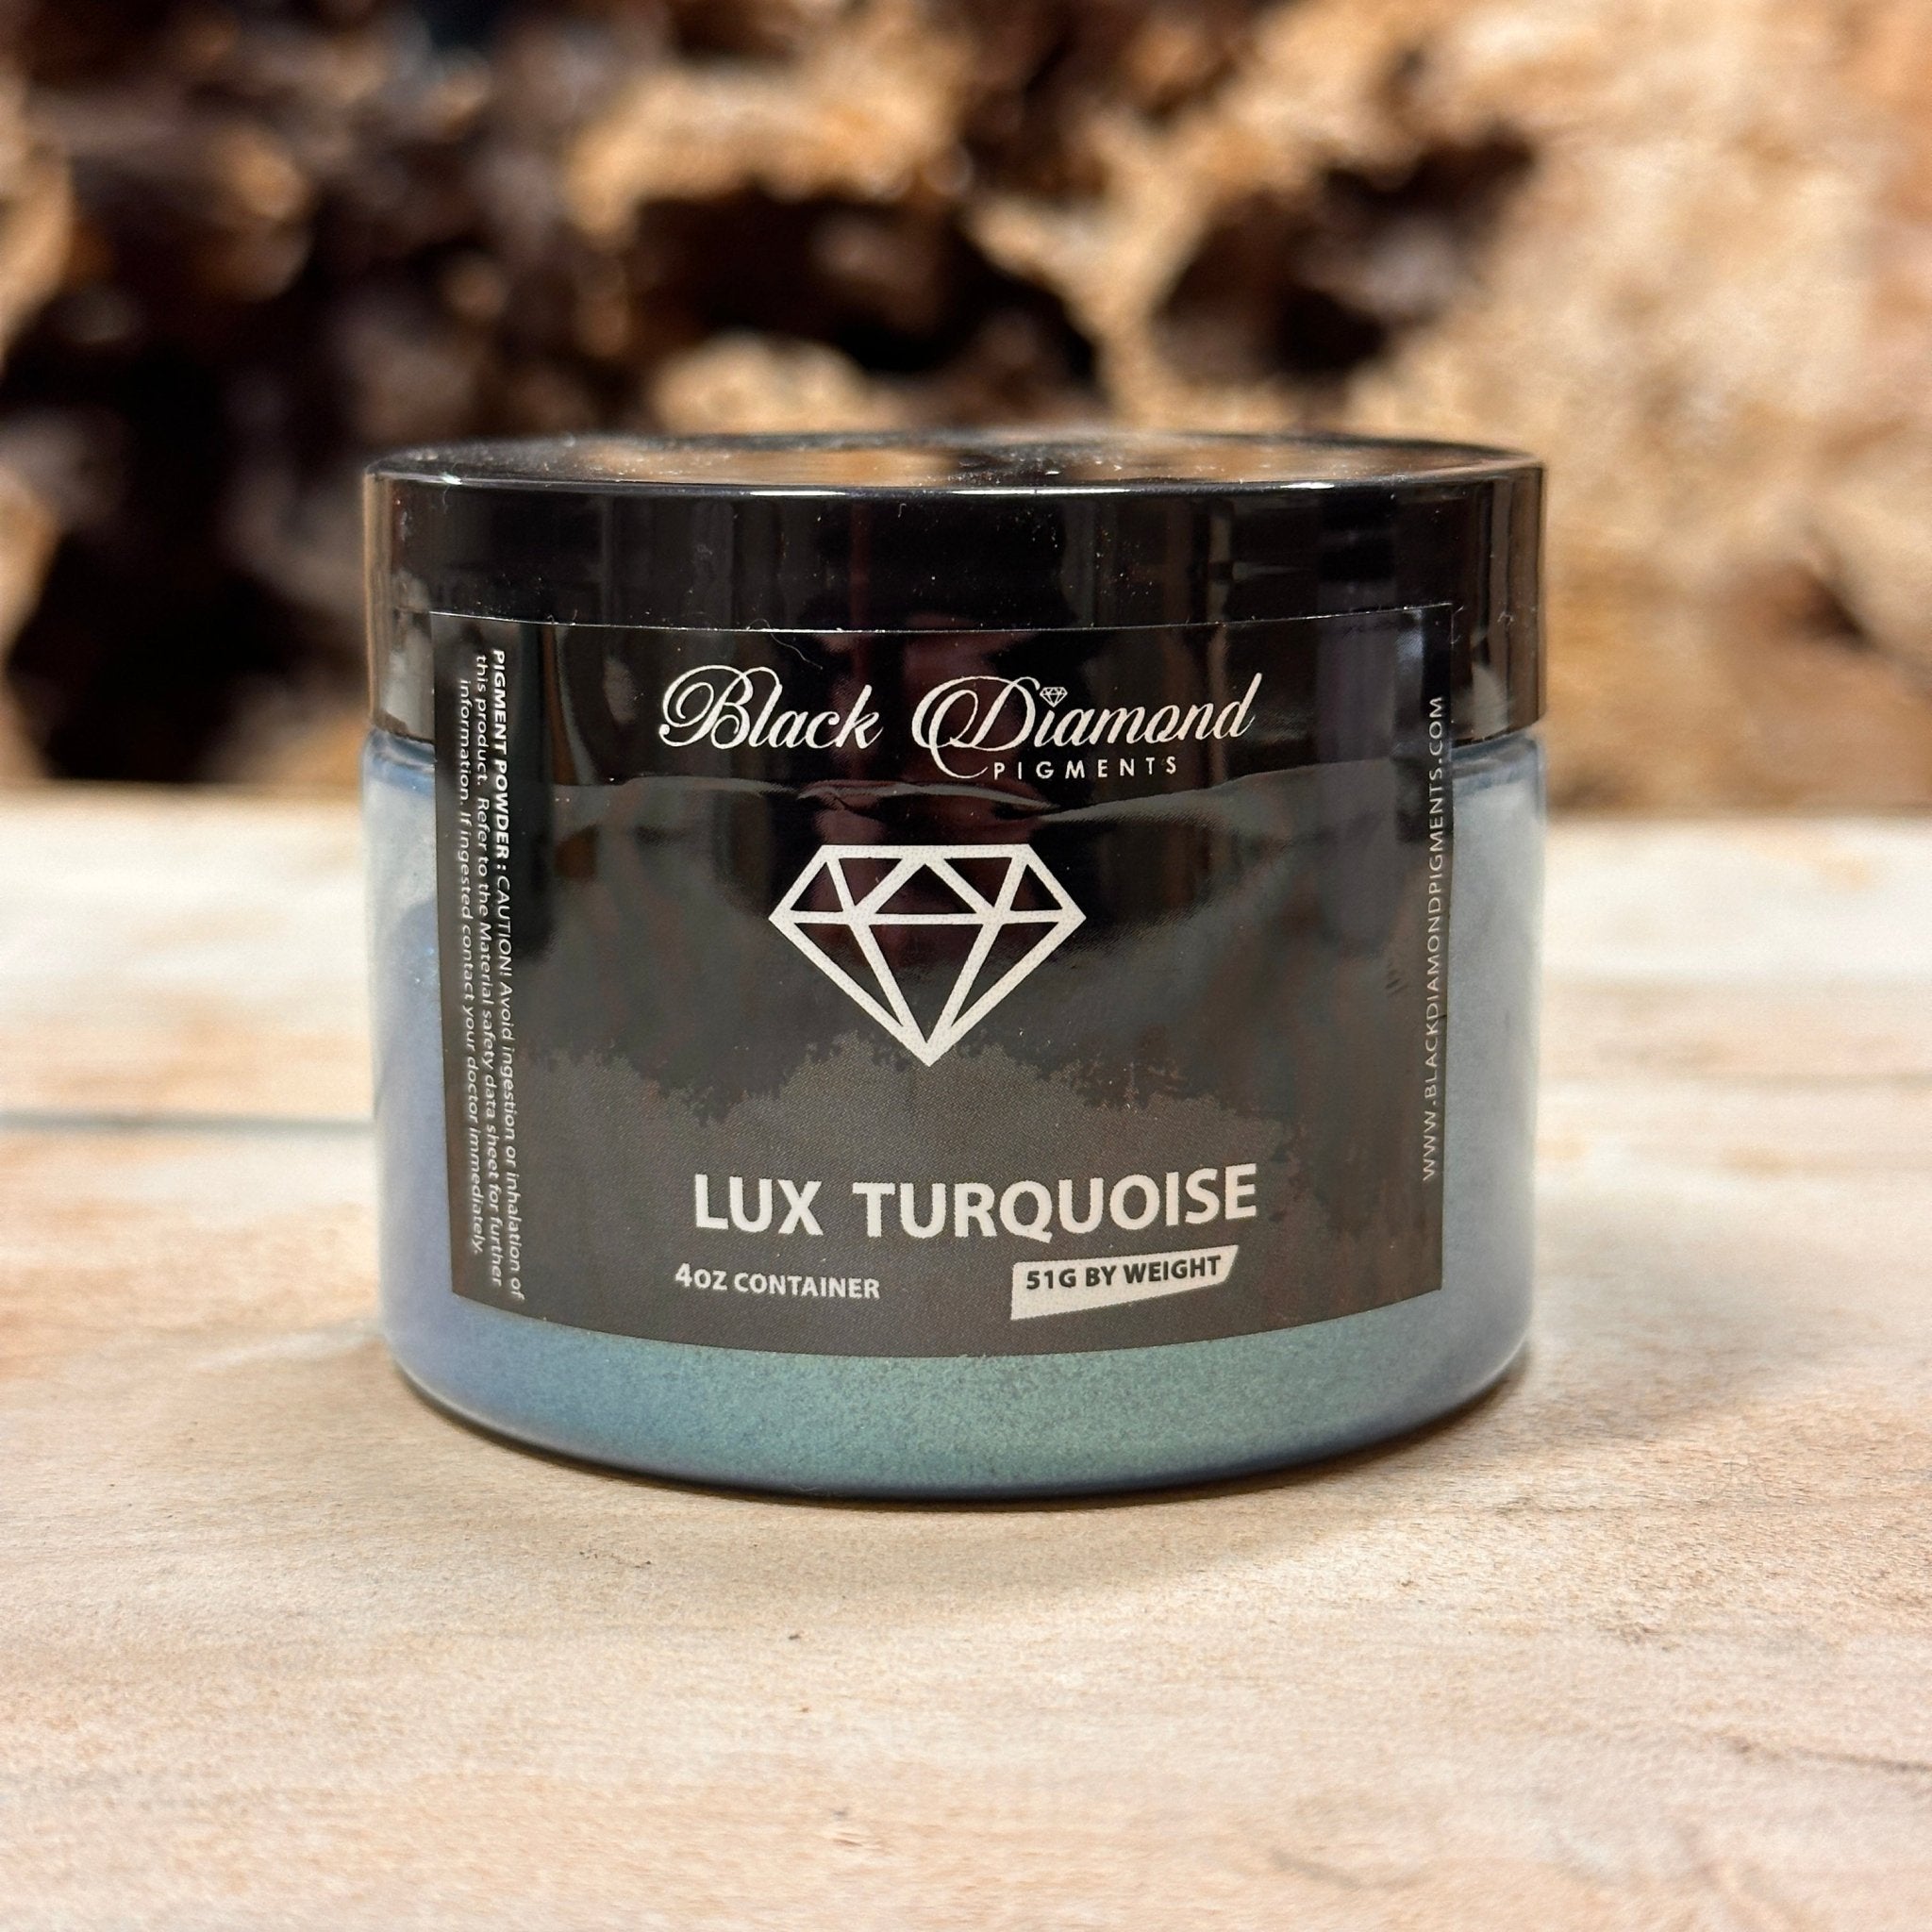 Black Diamond Pigments - Lux Turquoise - 42g | Mica Pigment | Black Diamond Pigments